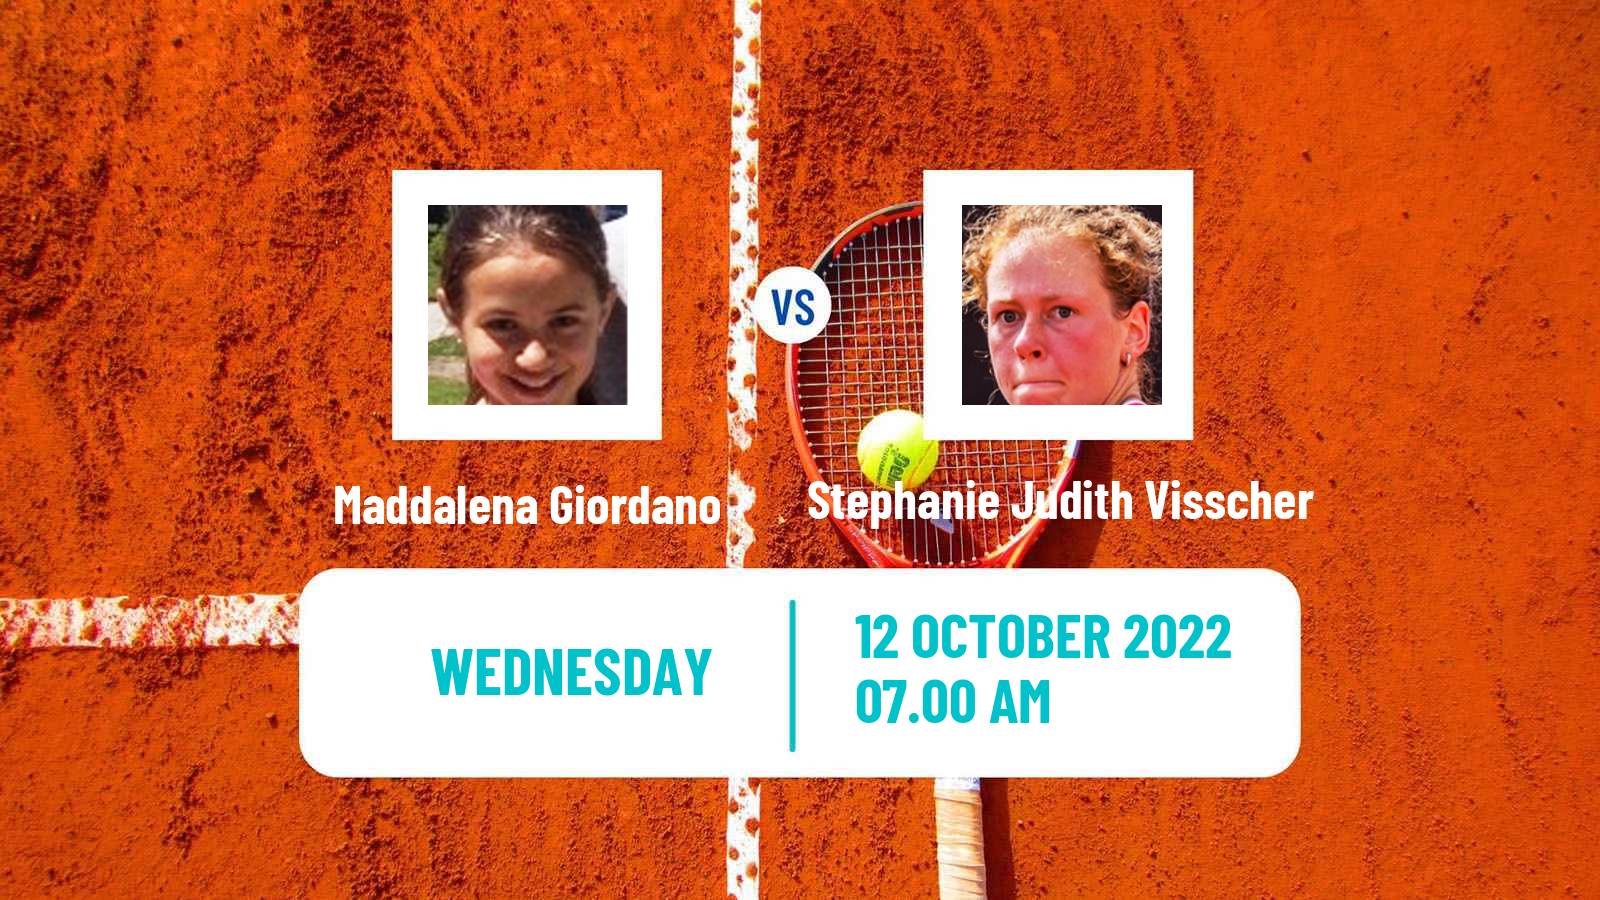 Tennis ITF Tournaments Maddalena Giordano - Stephanie Judith Visscher